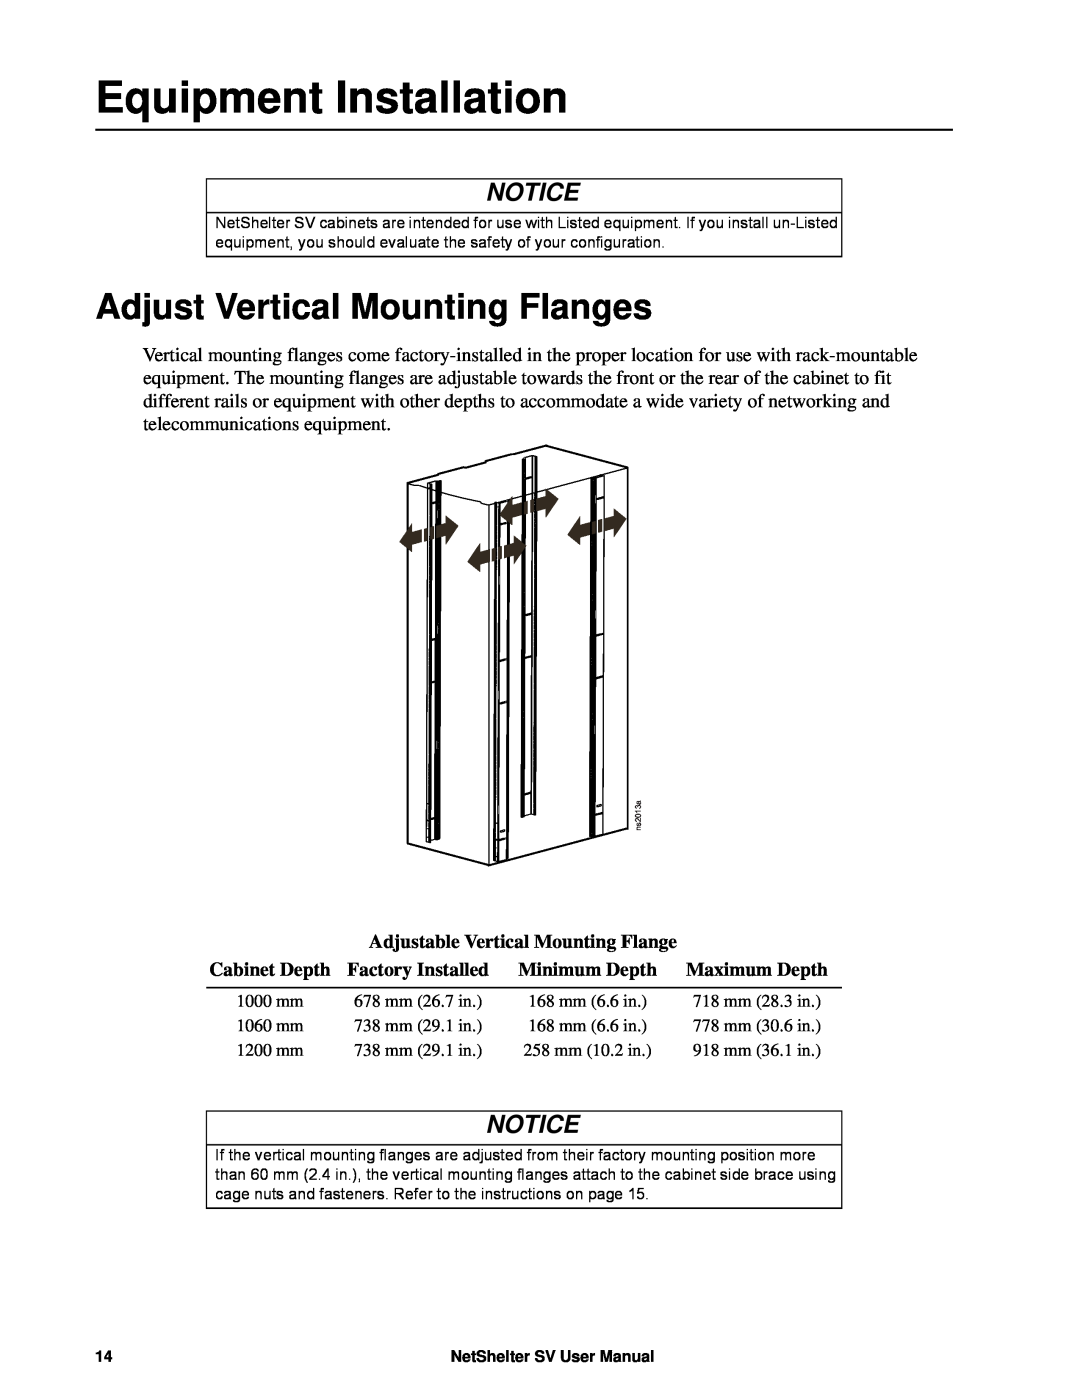 APC AR2400 user manual Equipment Installation, Adjust Vertical Mounting Flanges, Notice 